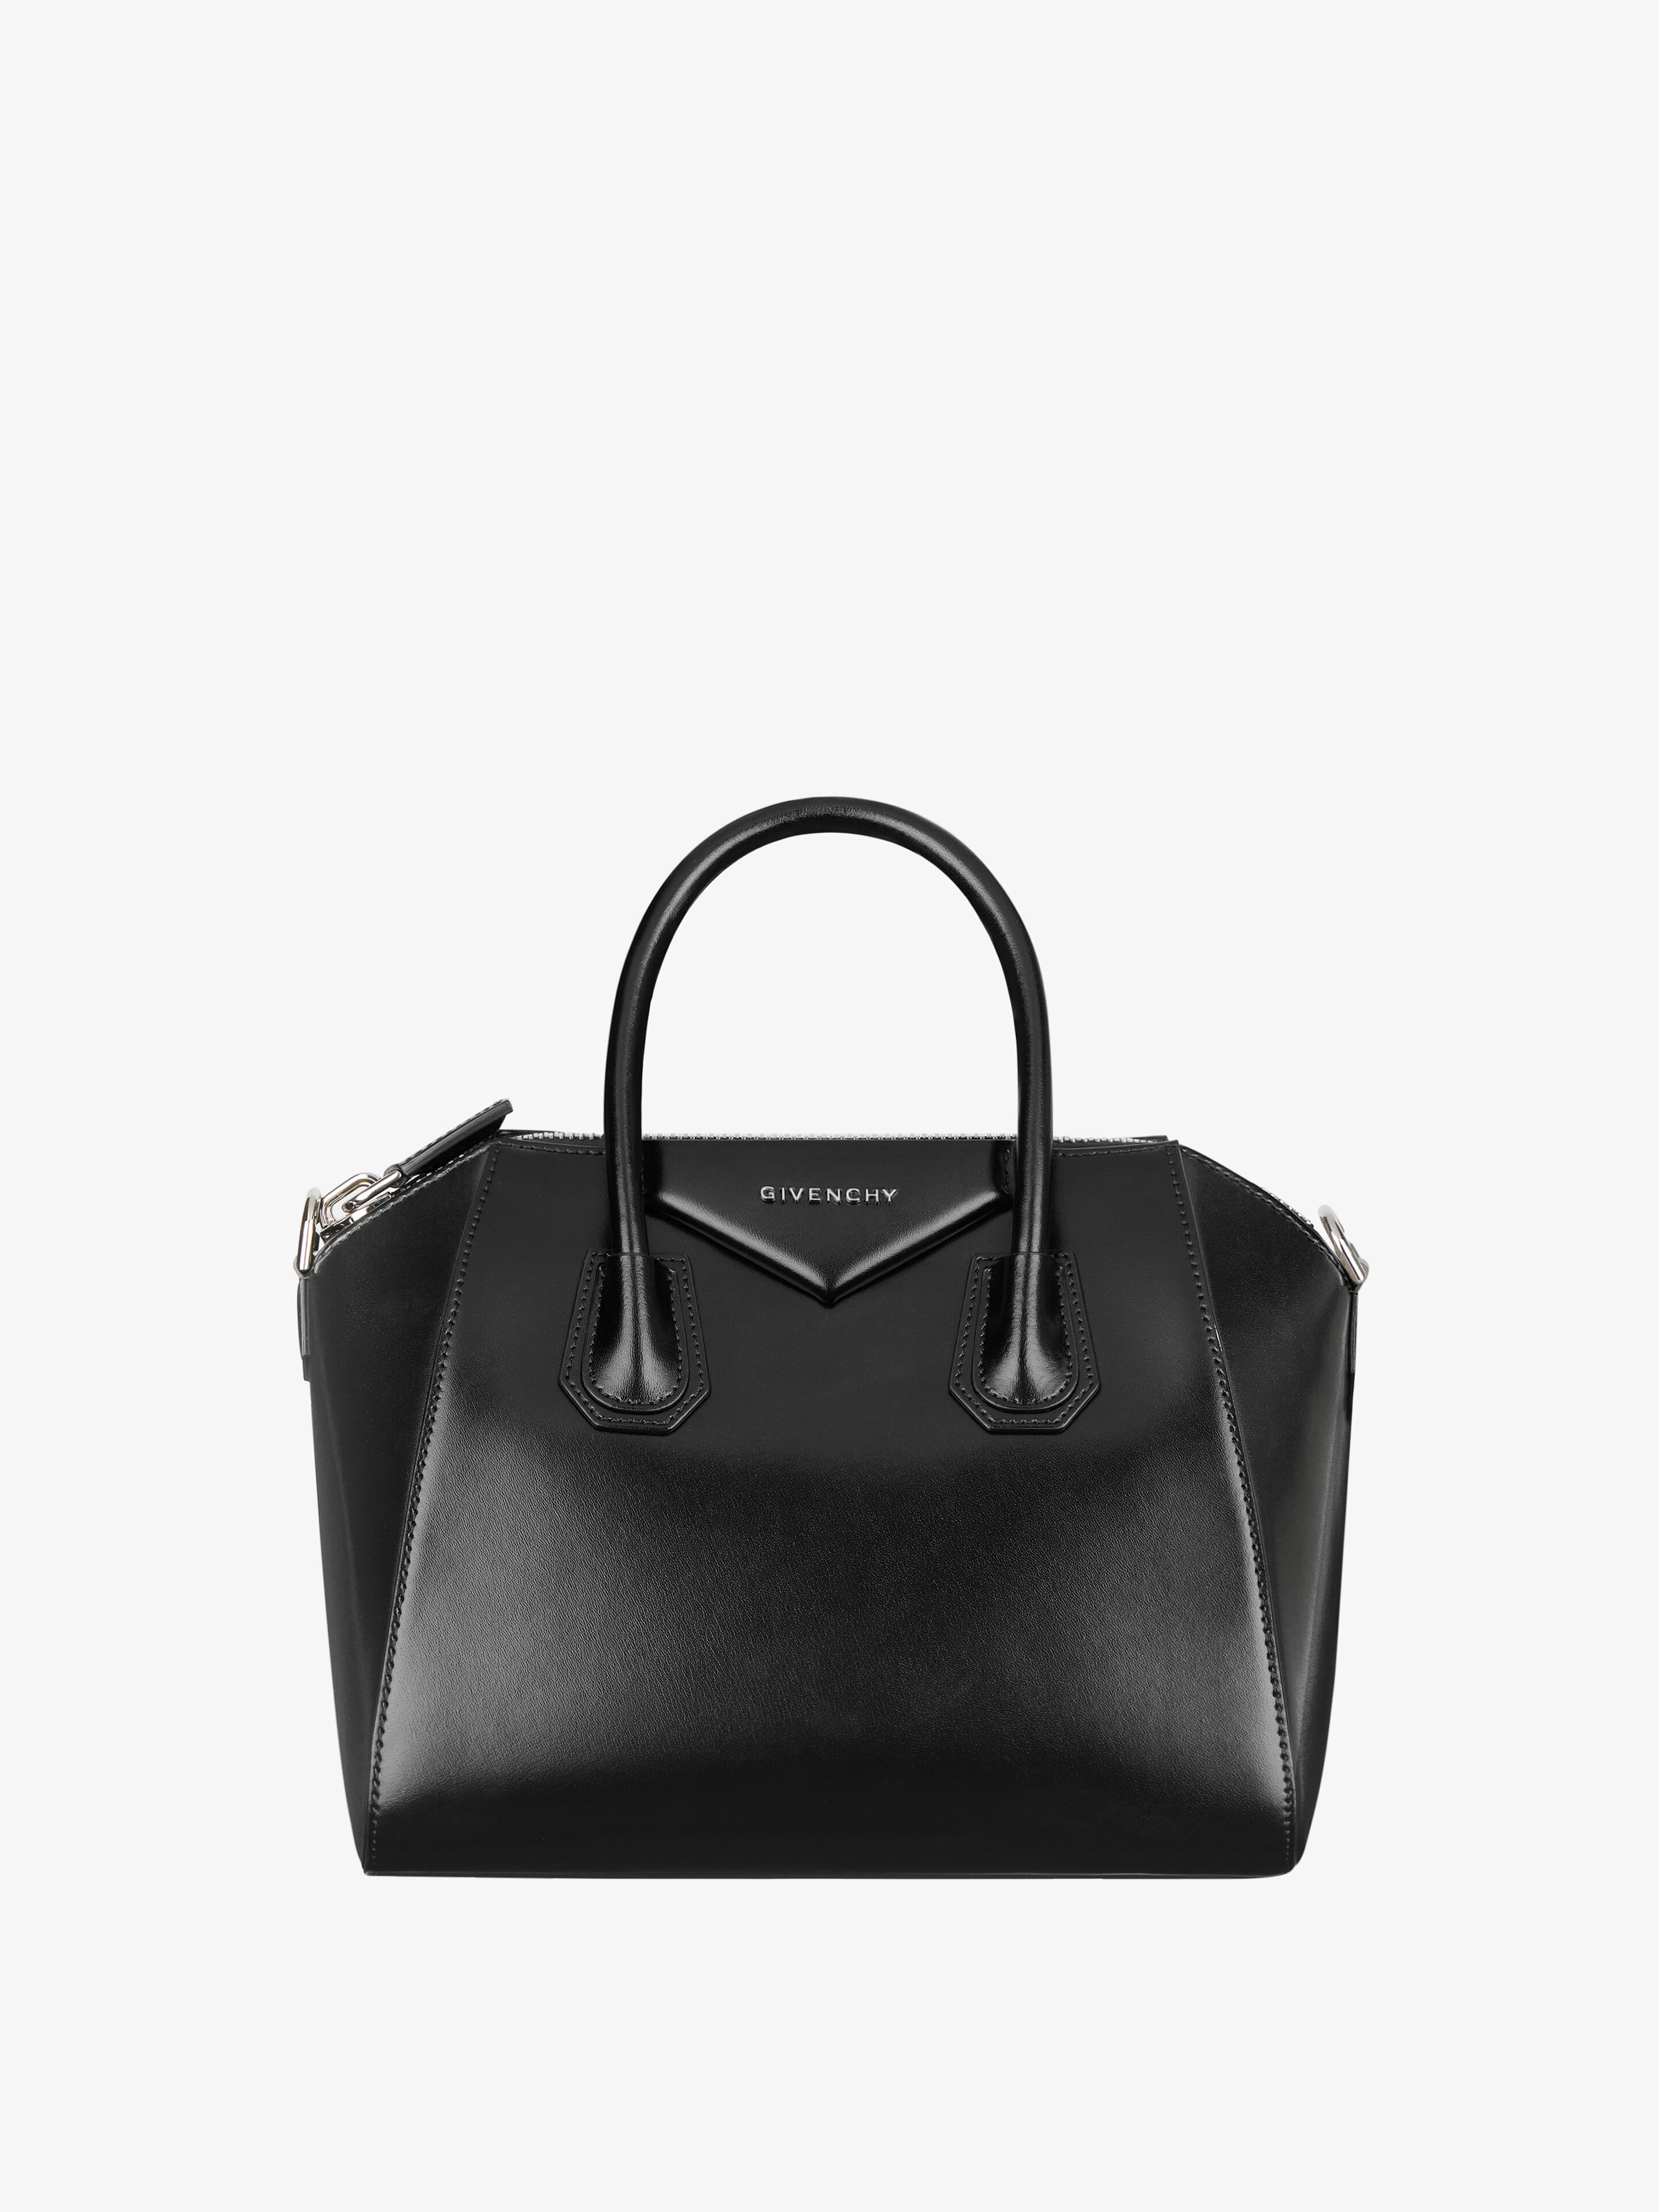 Success story: Givenchy's Antigona bag - LadyFirst